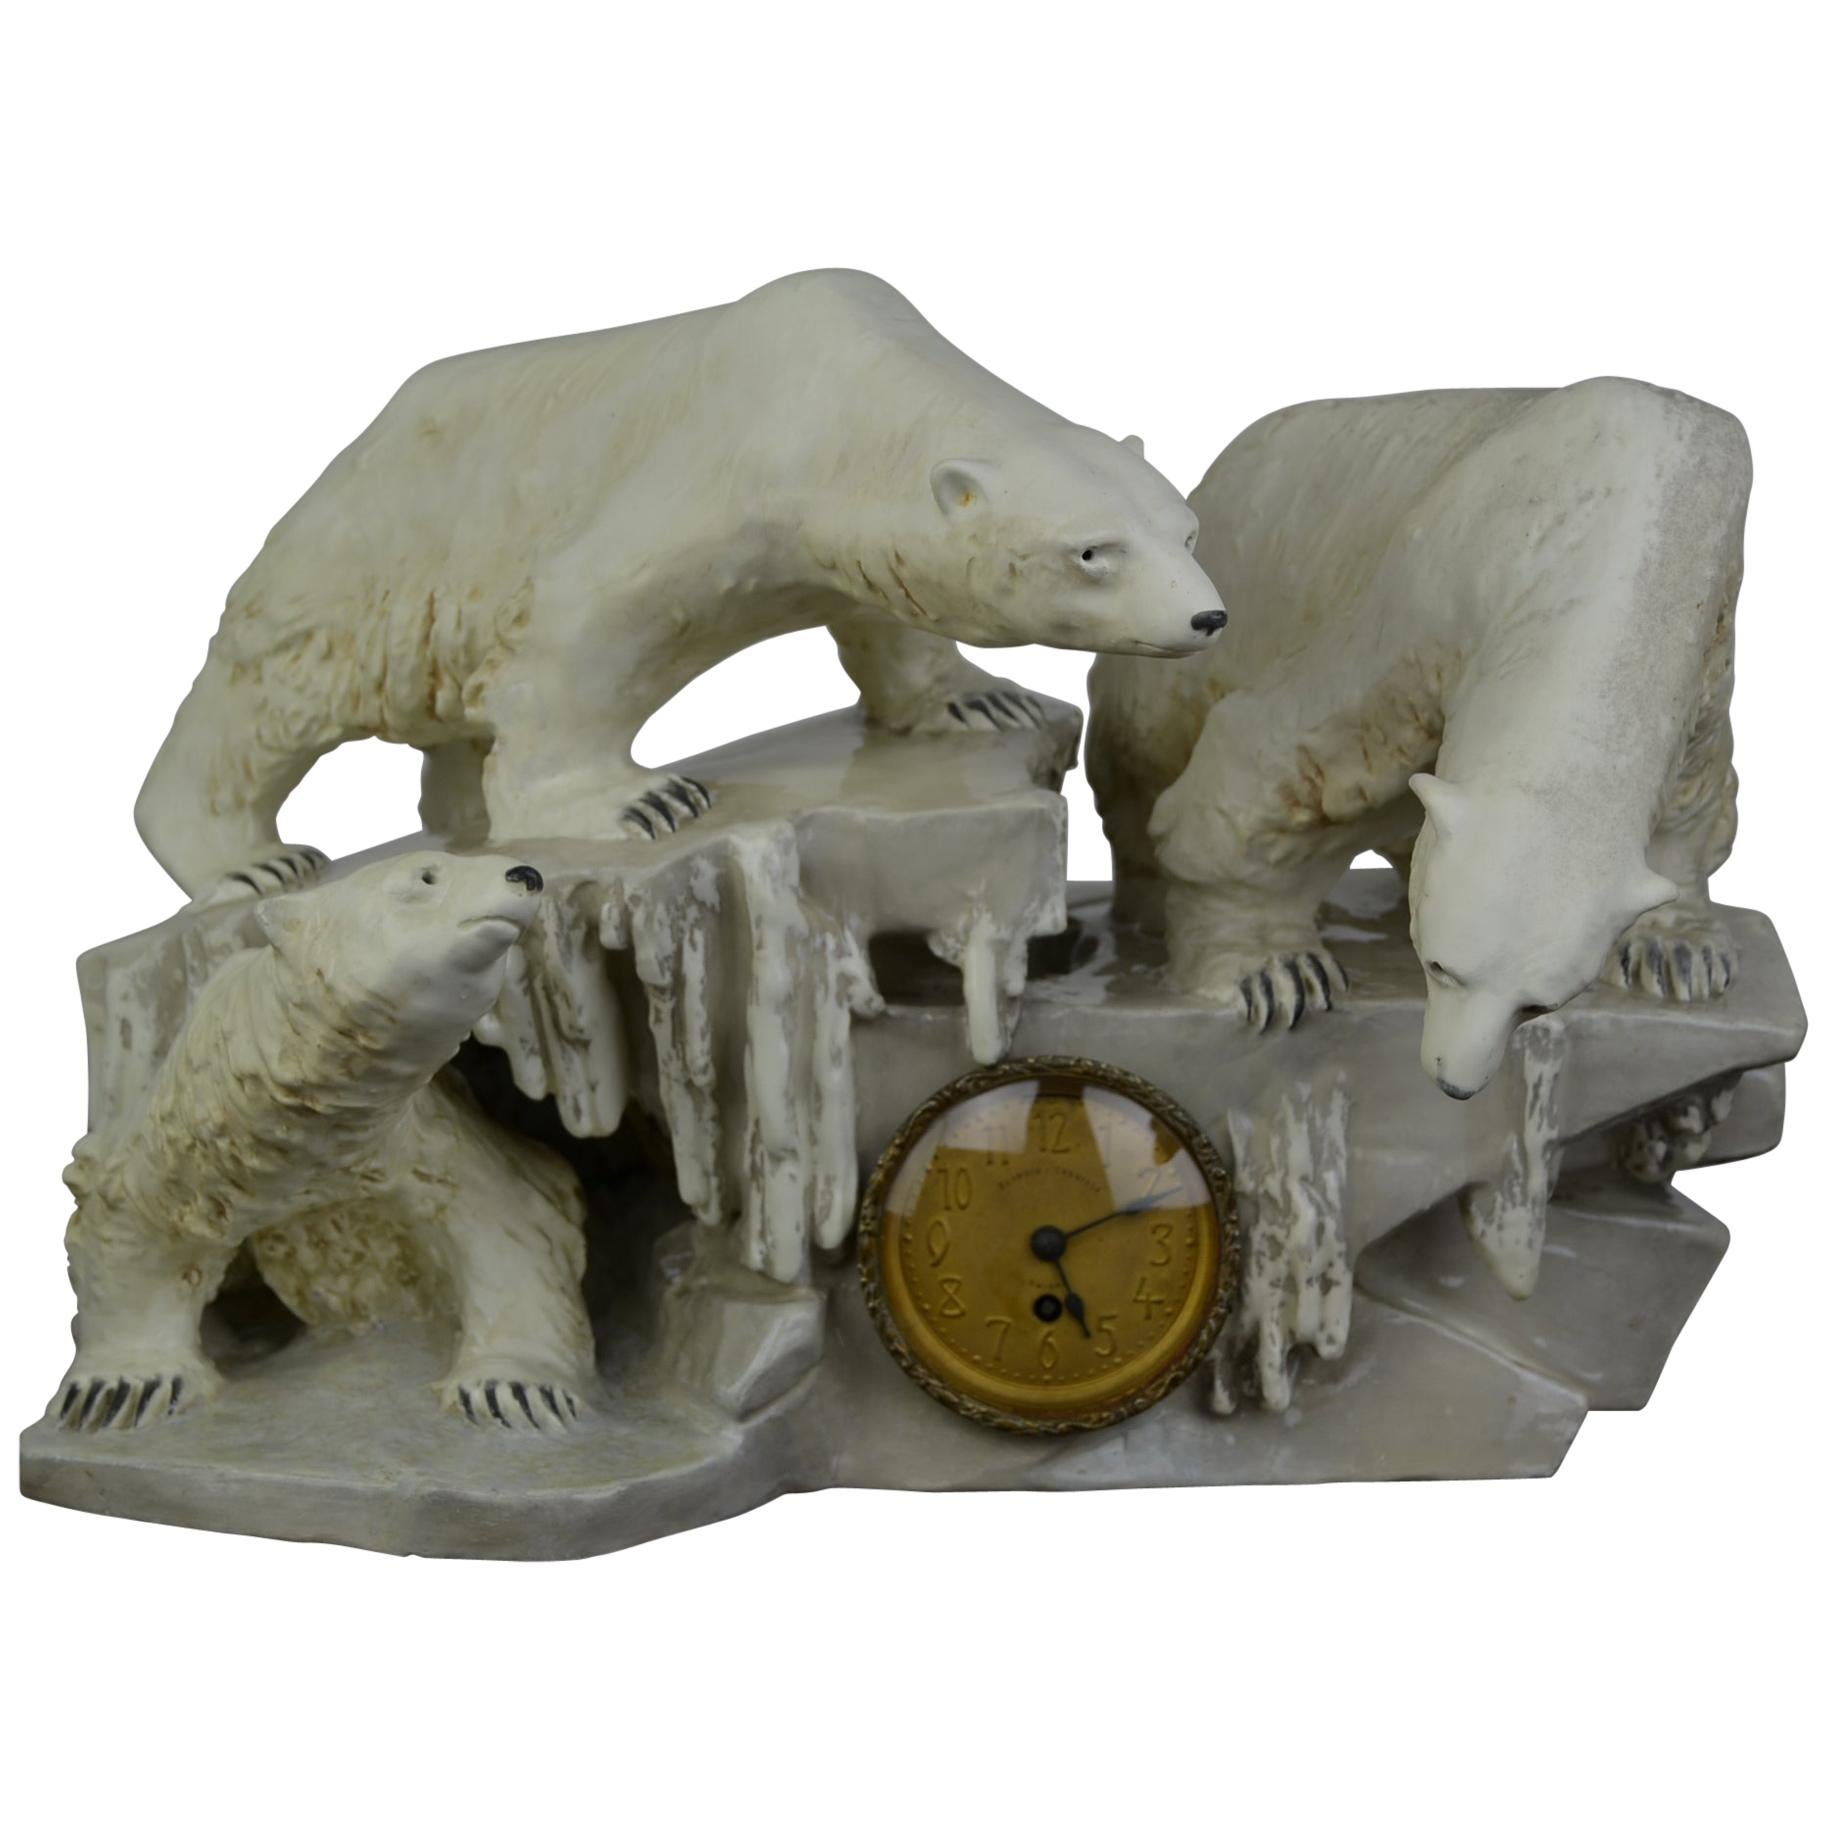 Anton Puchegger Polar Bear Ceramic Statue with Clock, Early 20th Century For Sale